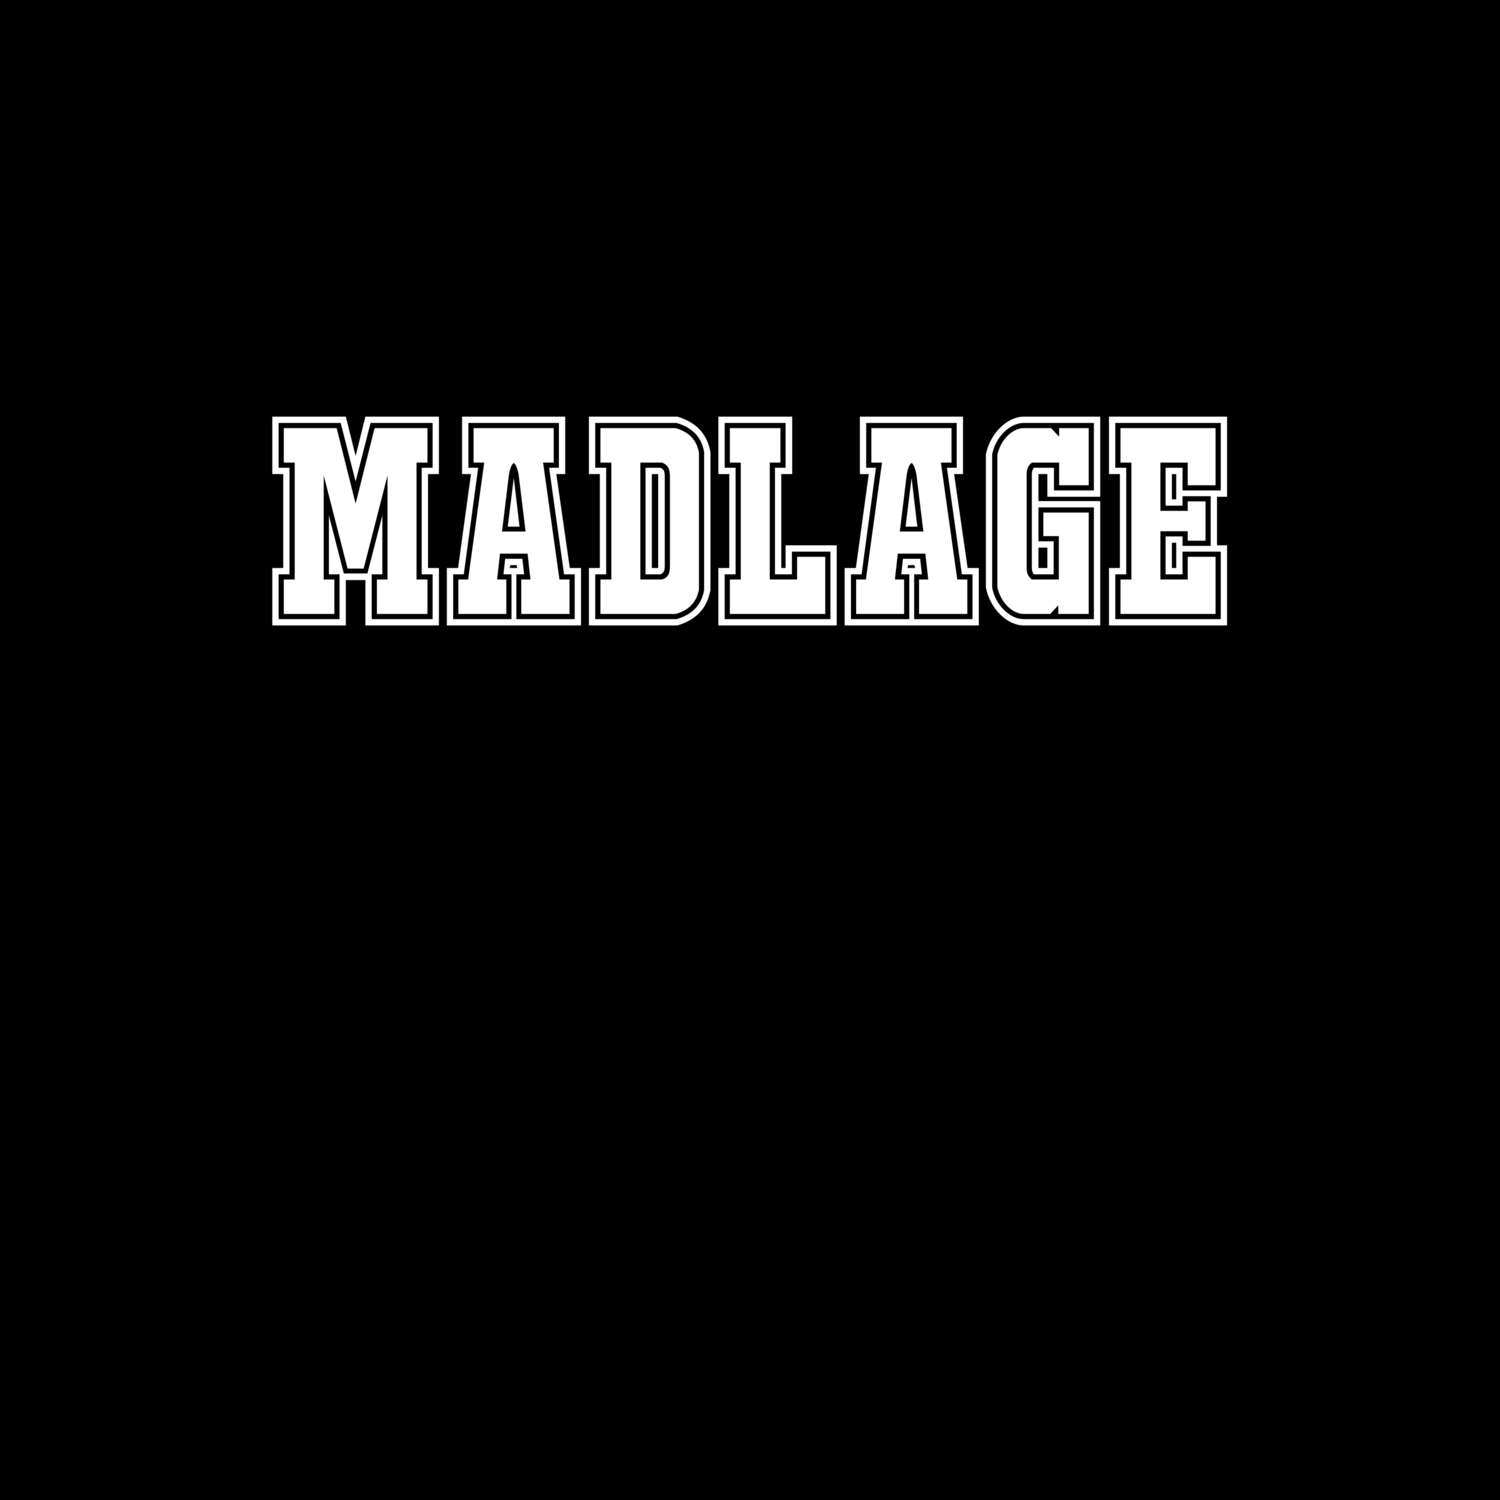 Madlage T-Shirt »Classic«